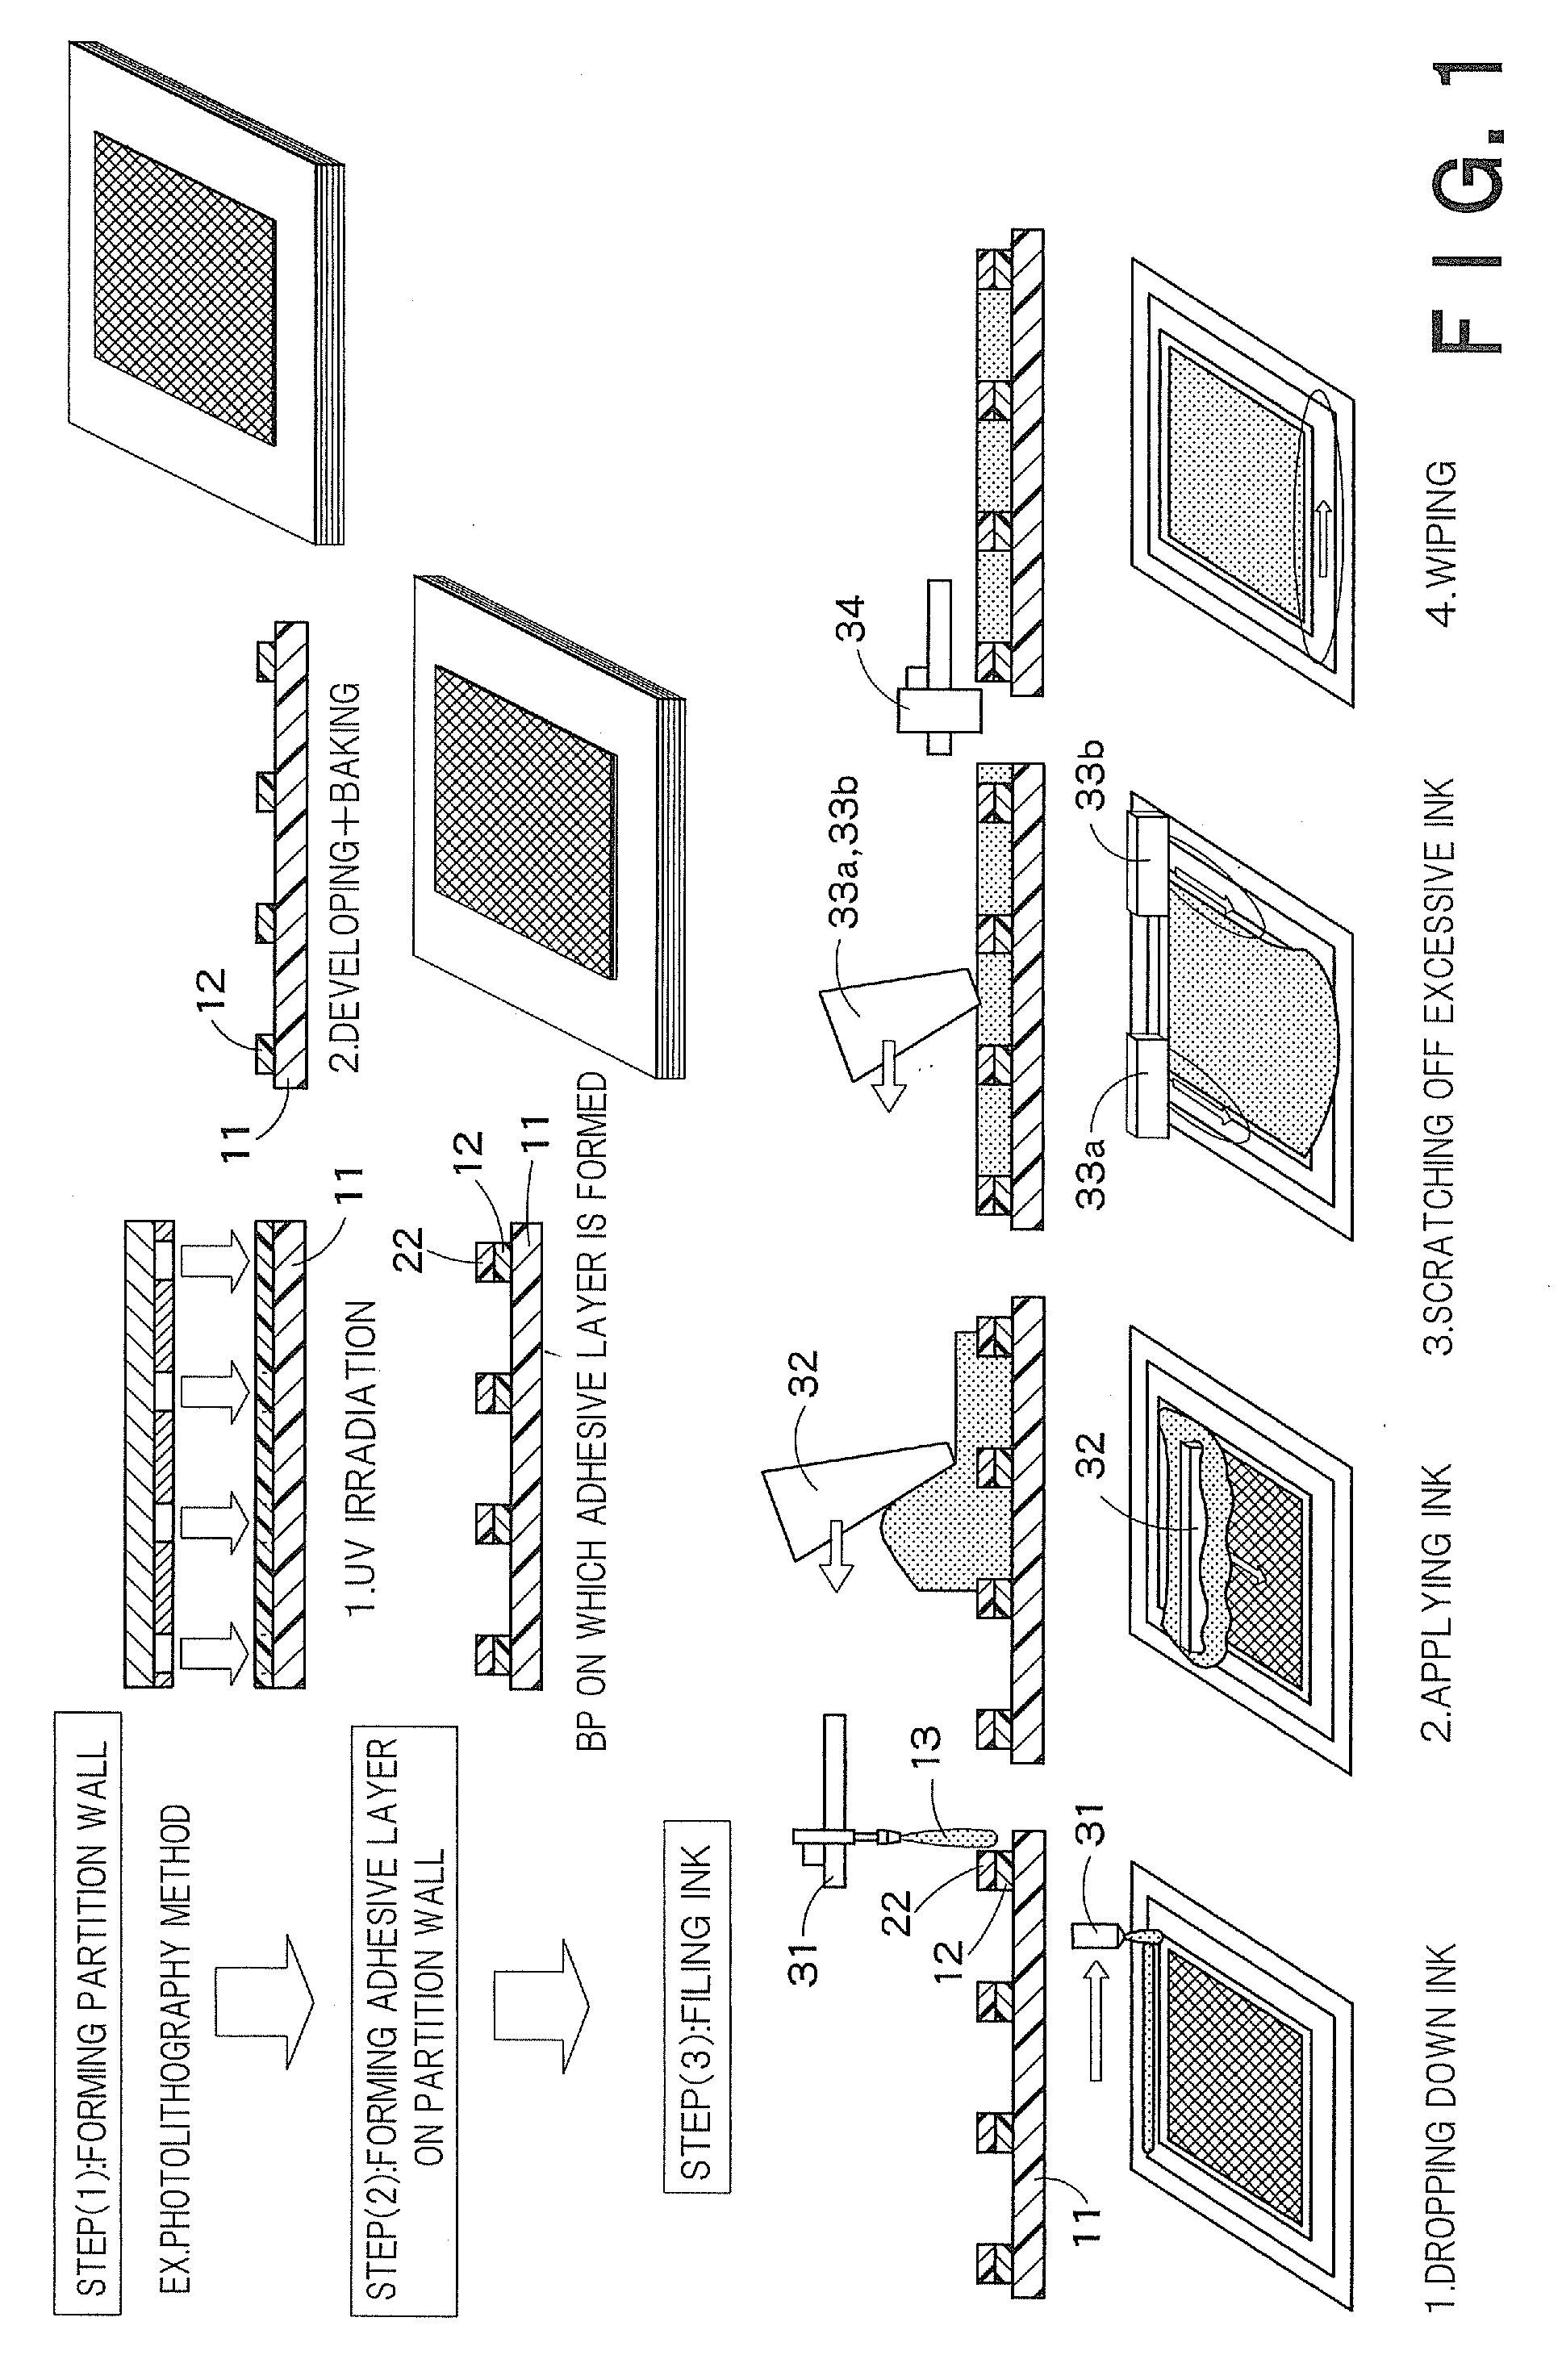 Method of manufacturing electrophoretic display device